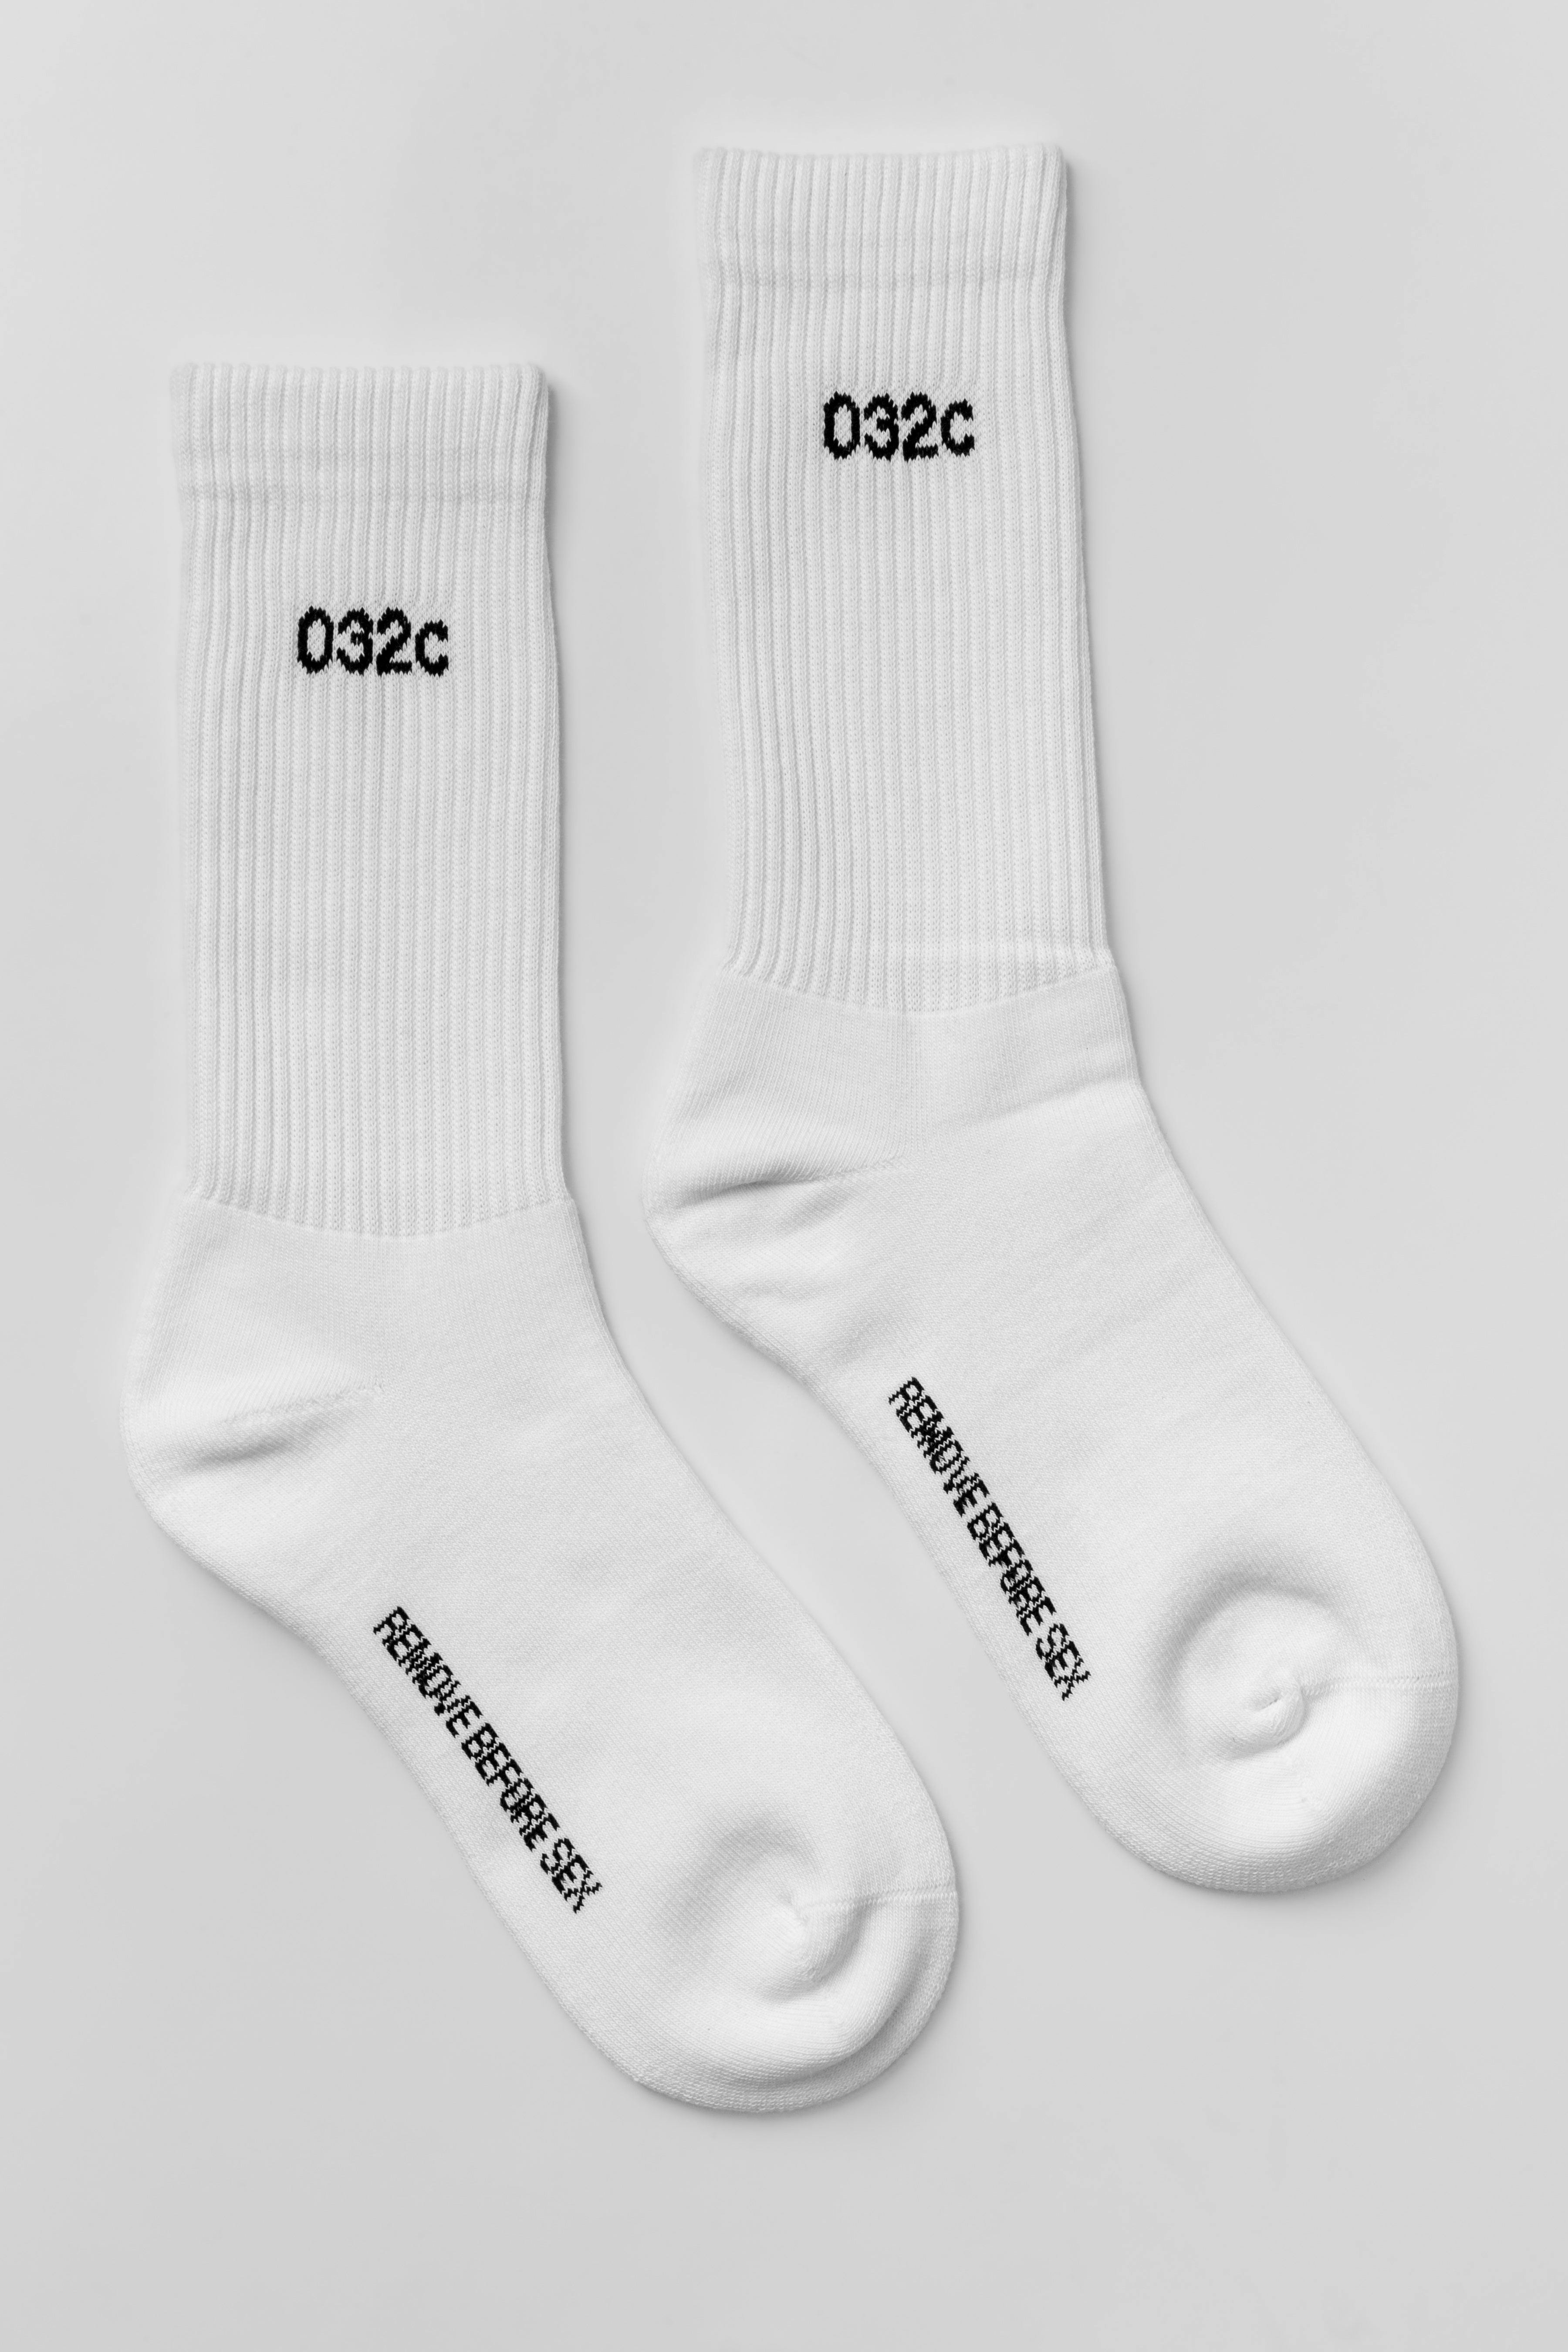 REMOVE BEFORE SEX Socks White/Black - 032c2306acc-181_5ba1f059-2852-4ac4-898b-5895fd01dfa3